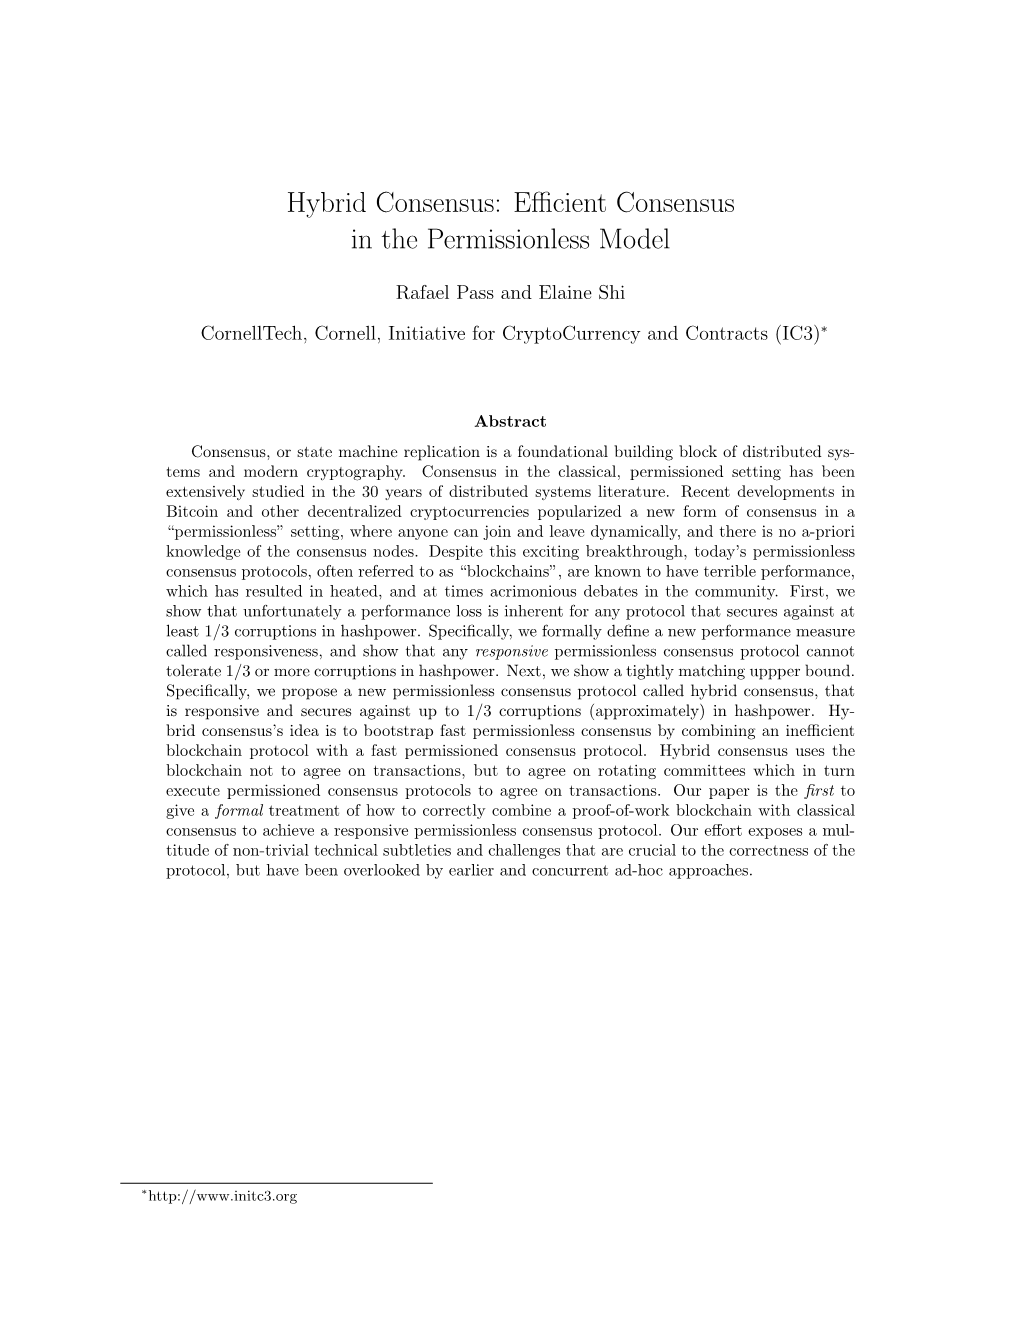 Hybrid Consensus: Efficient Consensus in the Permissionless Model